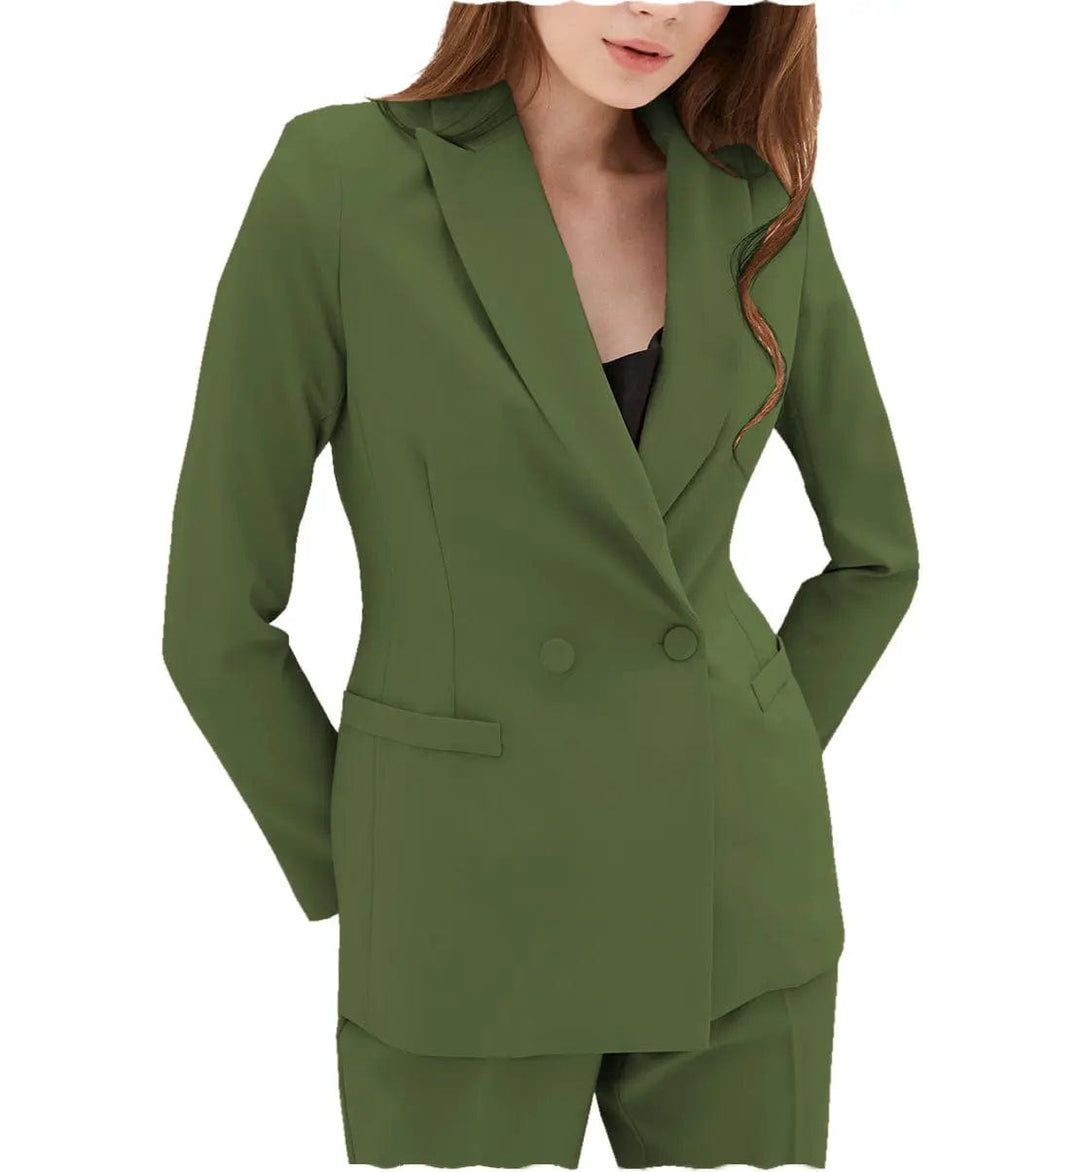 solovedress Women Suit 2 Piece Notch Lapel Blazer